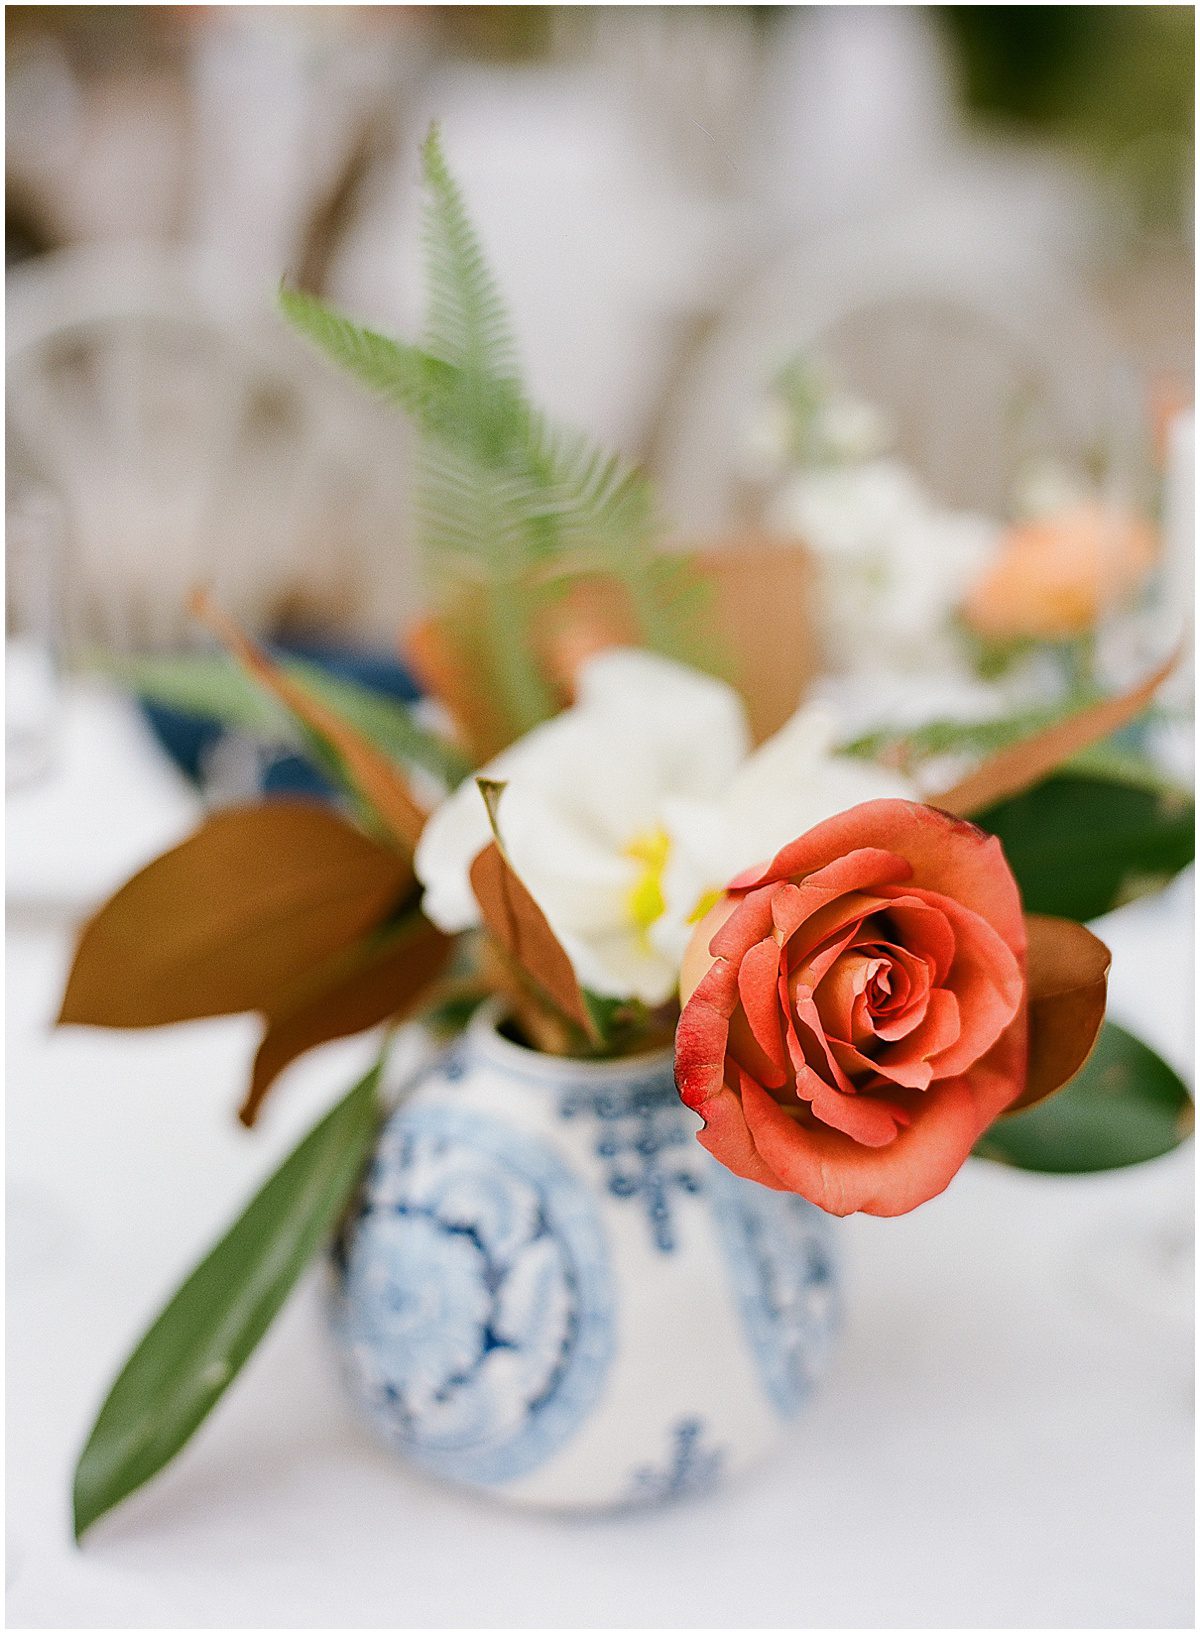 Blue and White Toile Vase with Orange Flowers Photo